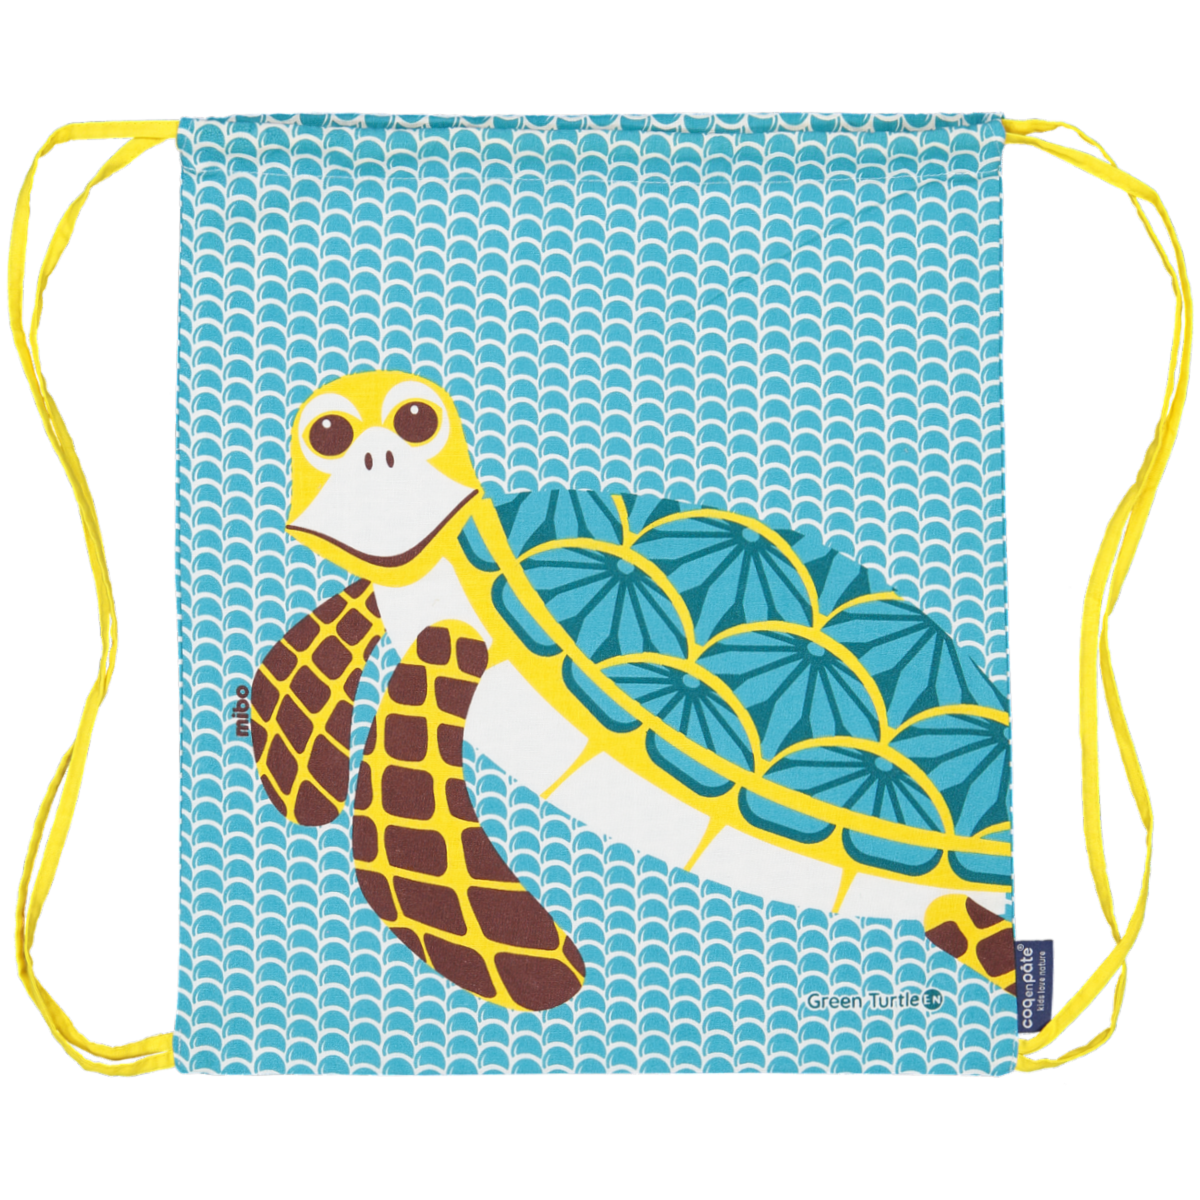 Activity Bag Backpack - Turtle